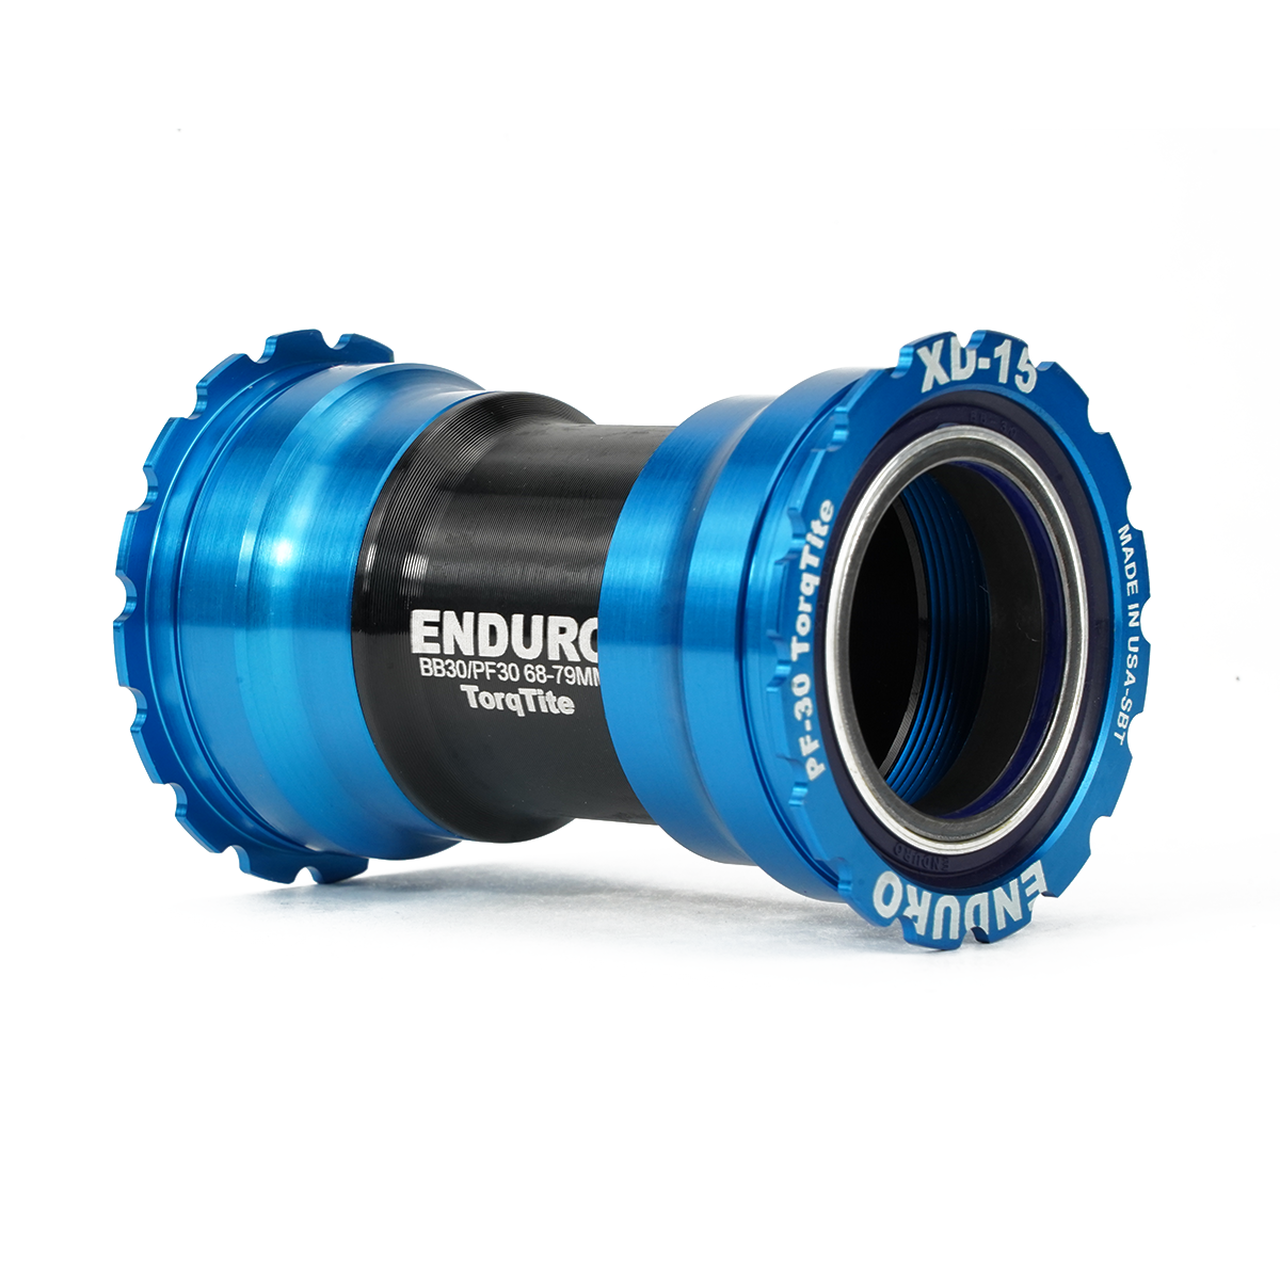 Enduro BKC-0650 - - TorqTite, Ceramic, XD-15 Corsa, 45¬®¬®¬®¬®¬®¬®¬®¬®¬¢ Angular Contact, Bearing Bottom Bracket for PF30 Framesets to 30mm Cranksets